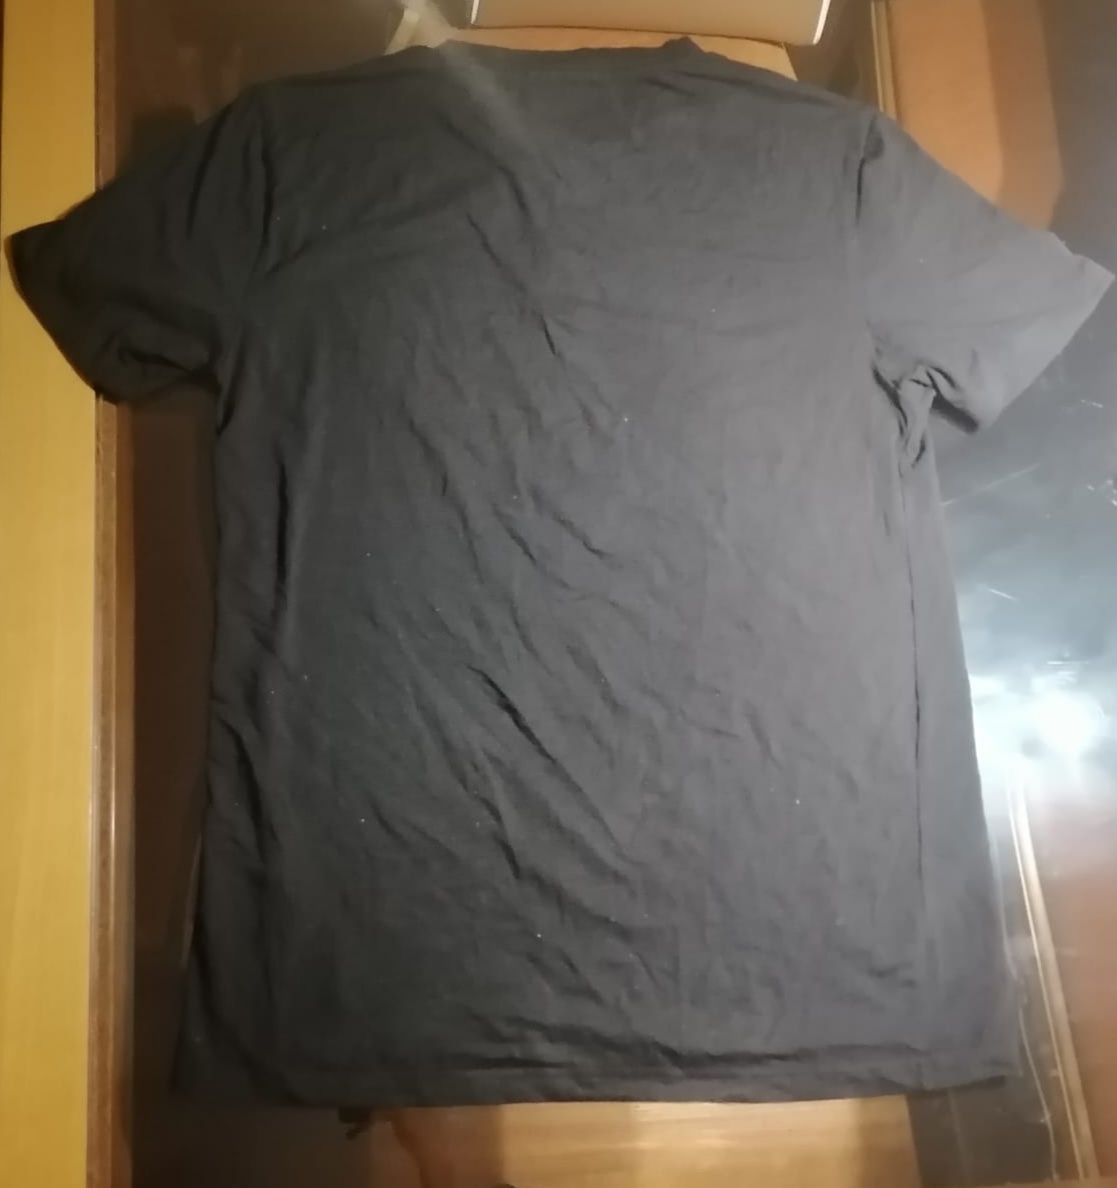 T shirt supply and demand